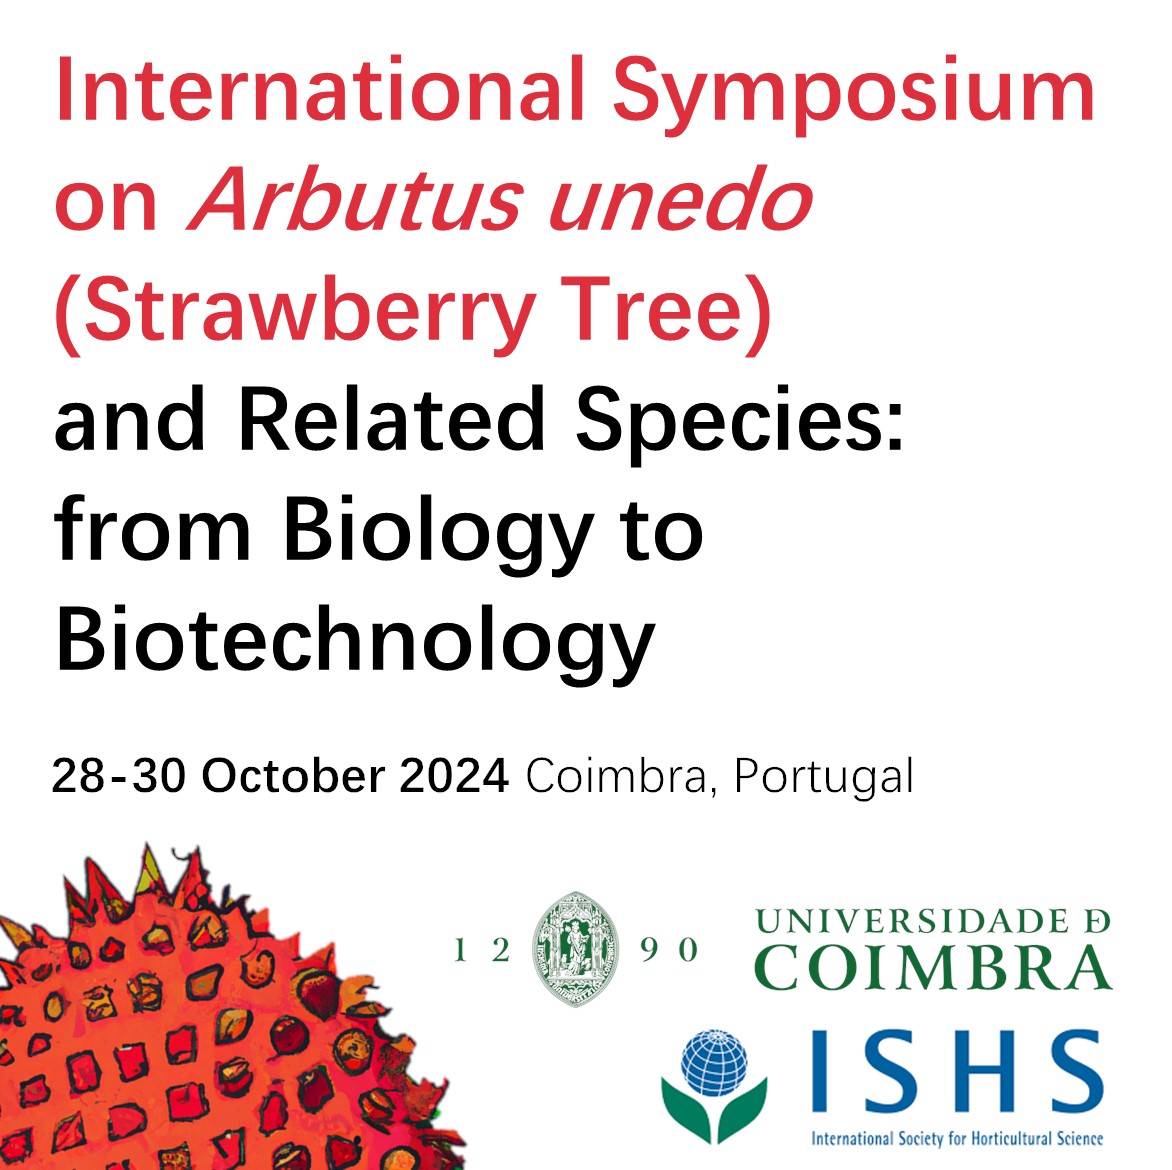 International Symposium on Arbutus unedo - Student Registation